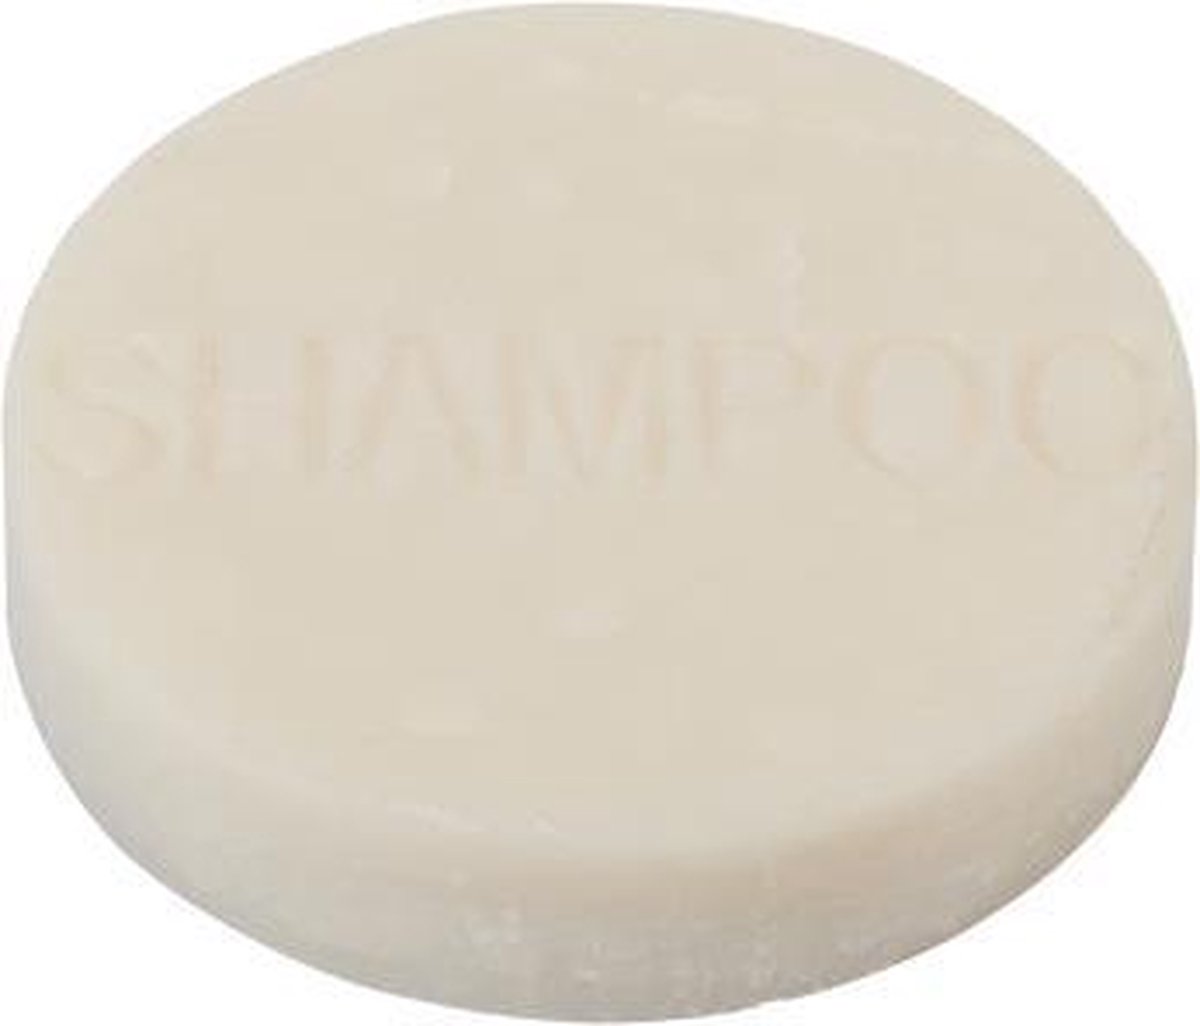 Shampoo bar-Mijn stijl- Parfum- Lily Amber inclusief blikje